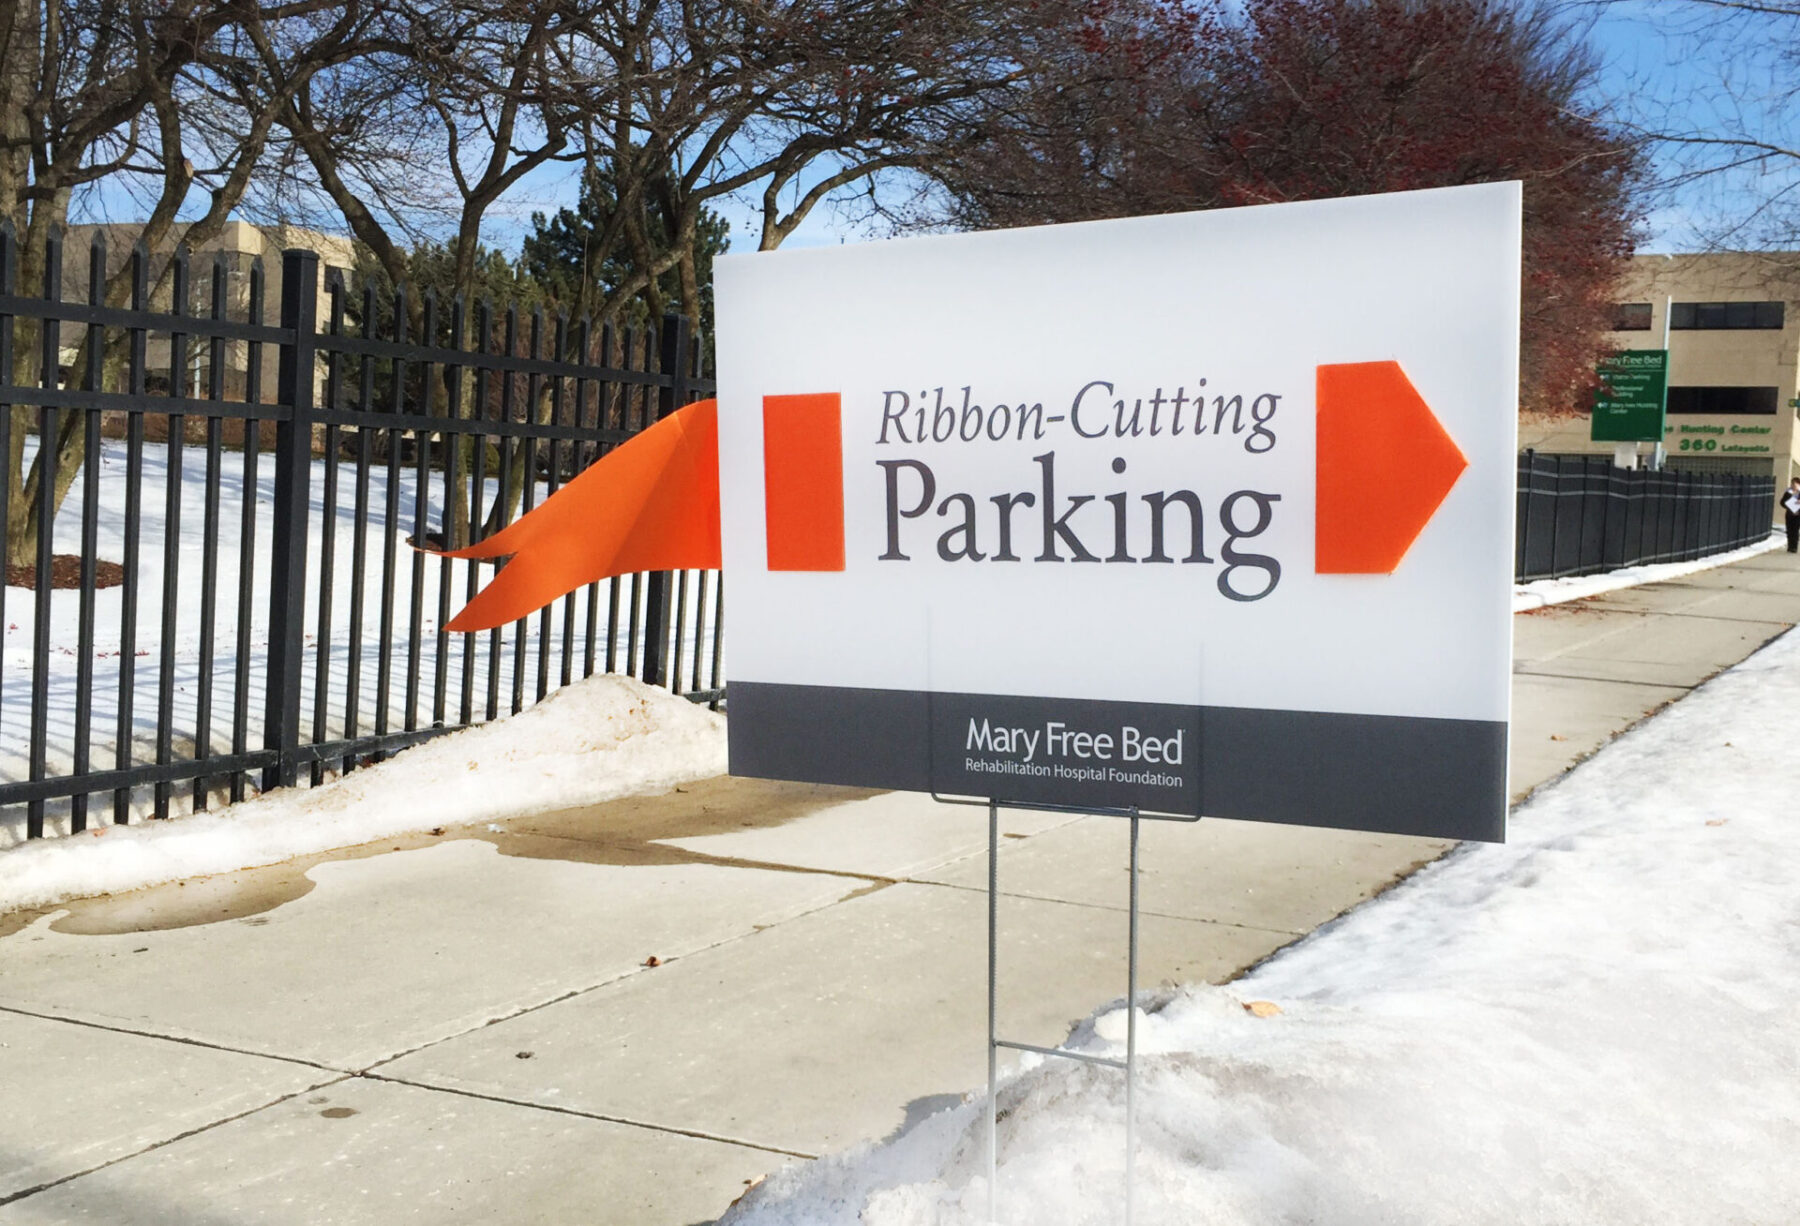 Ribbon-cutting event parking yard sign